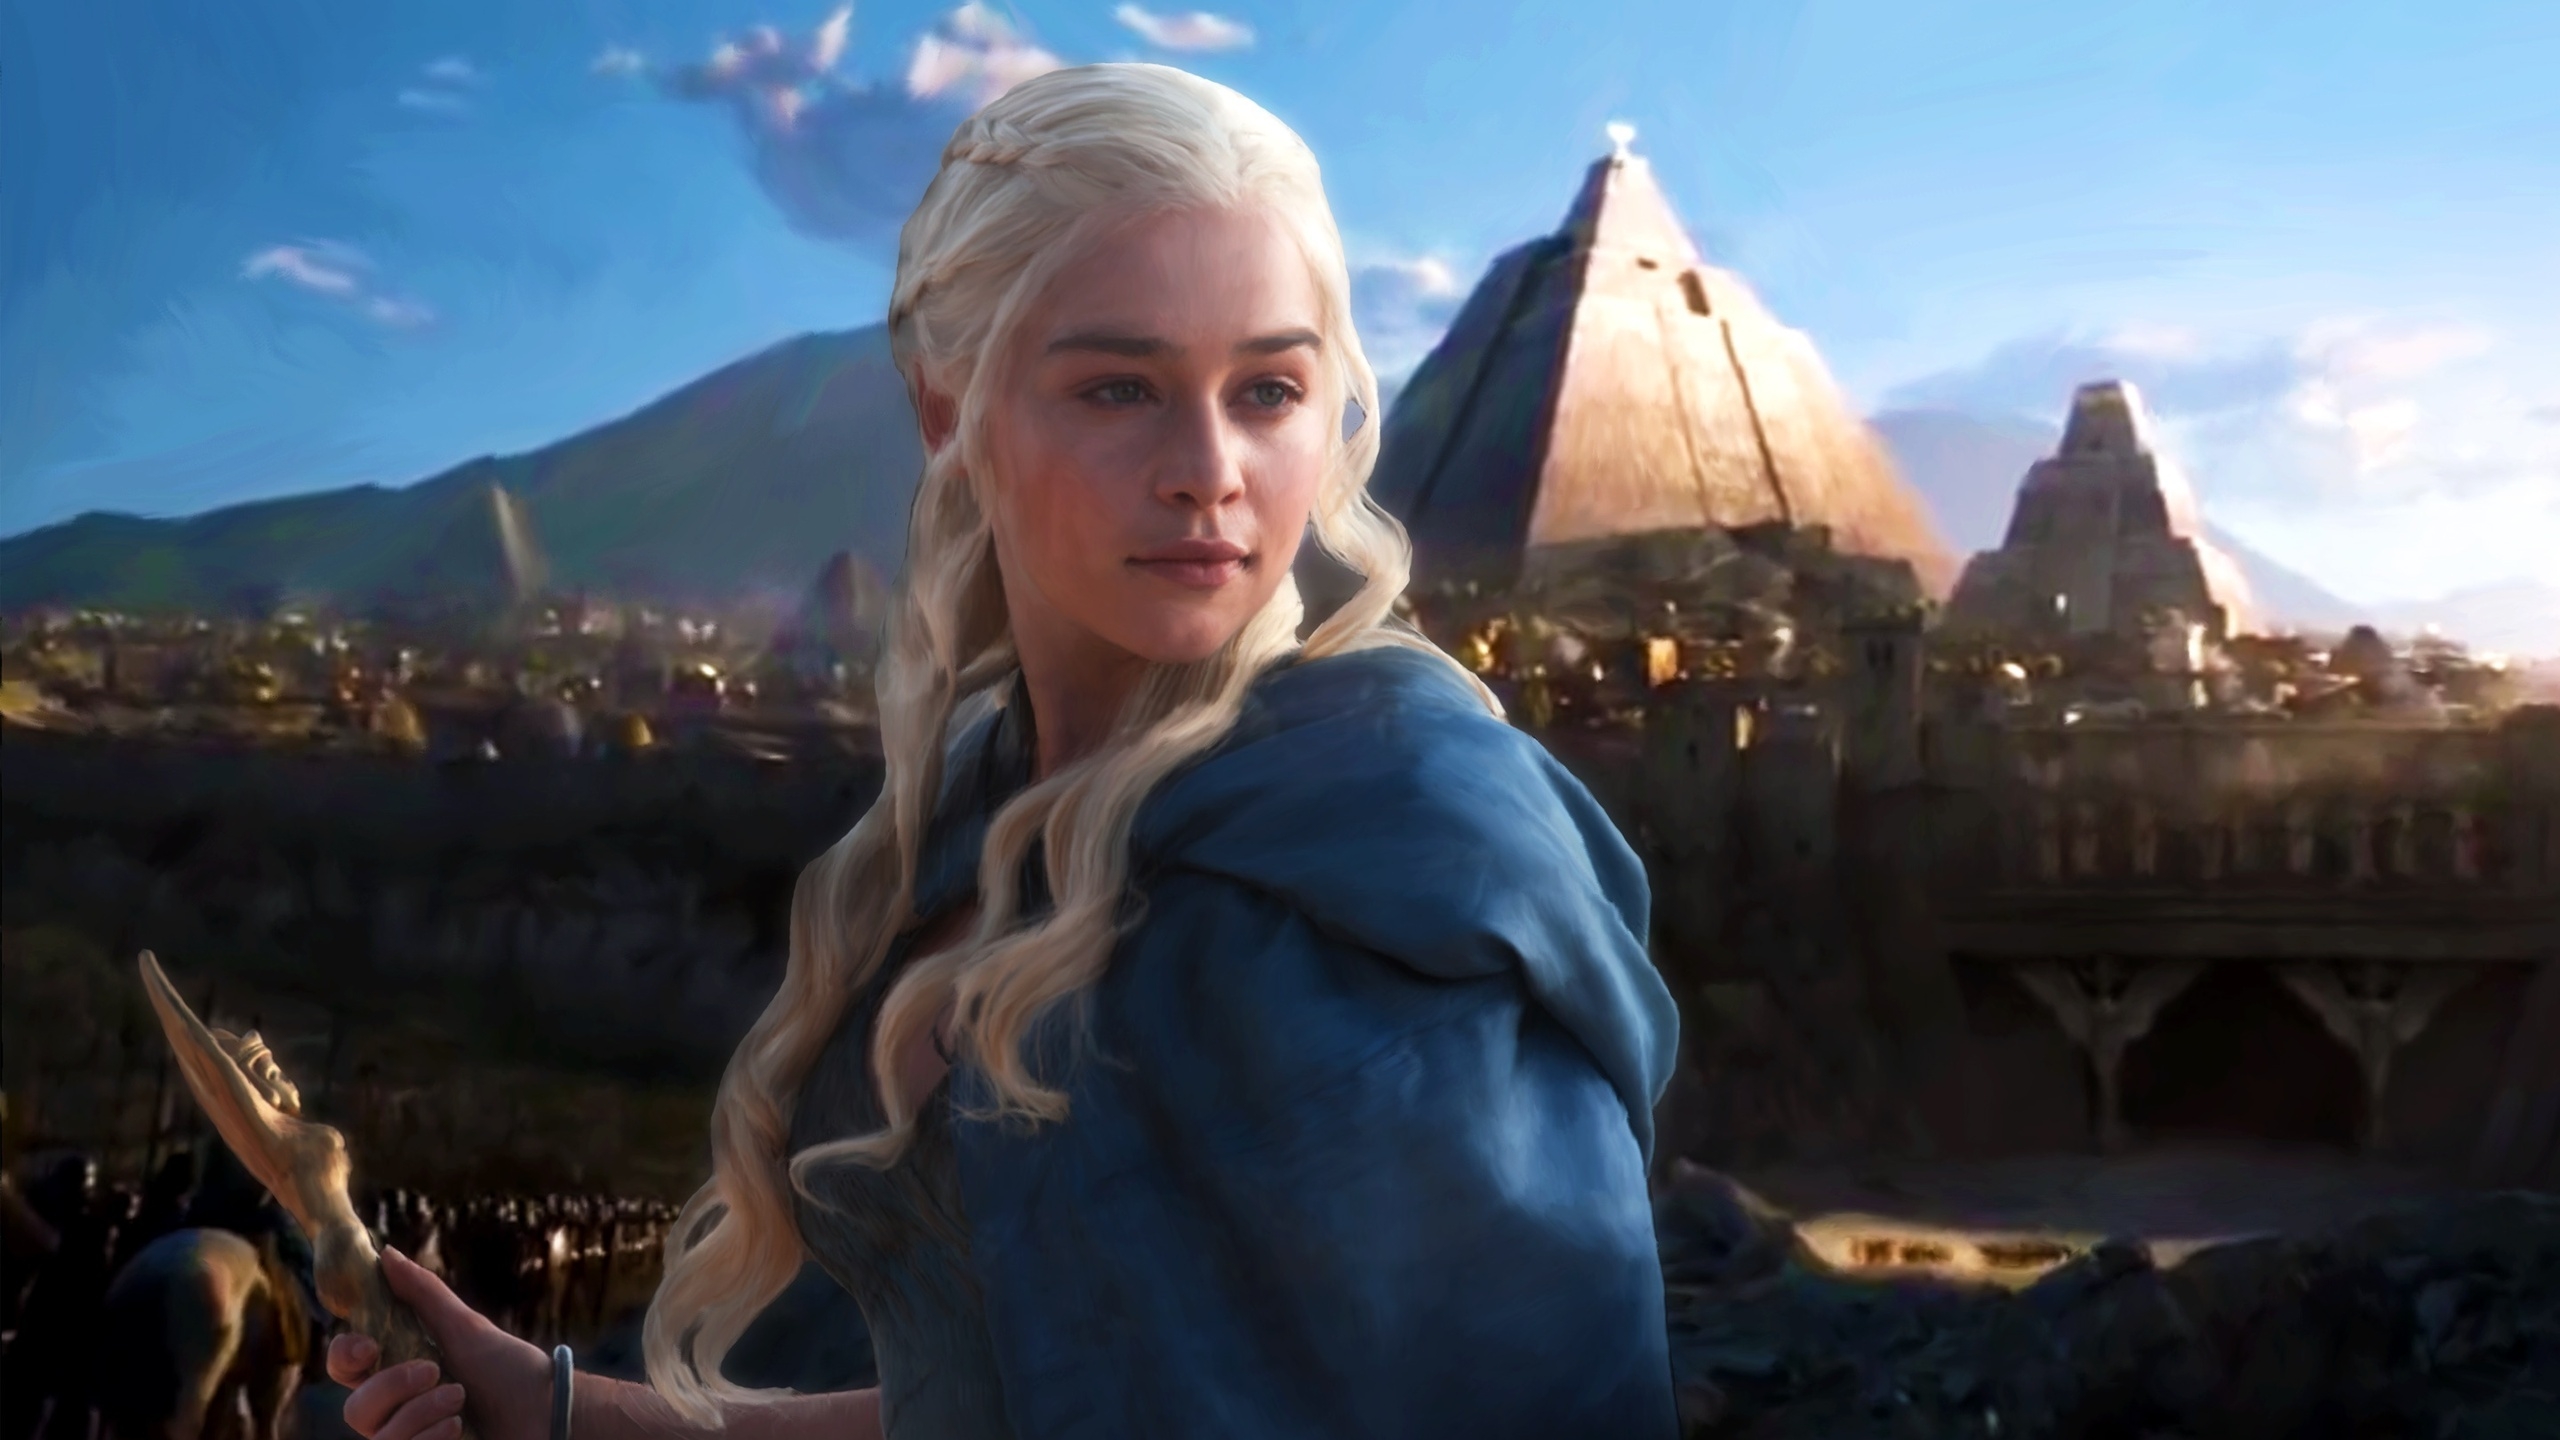 Daenerys Targaryen Fan Art for 2560x1440 HDTV resolution